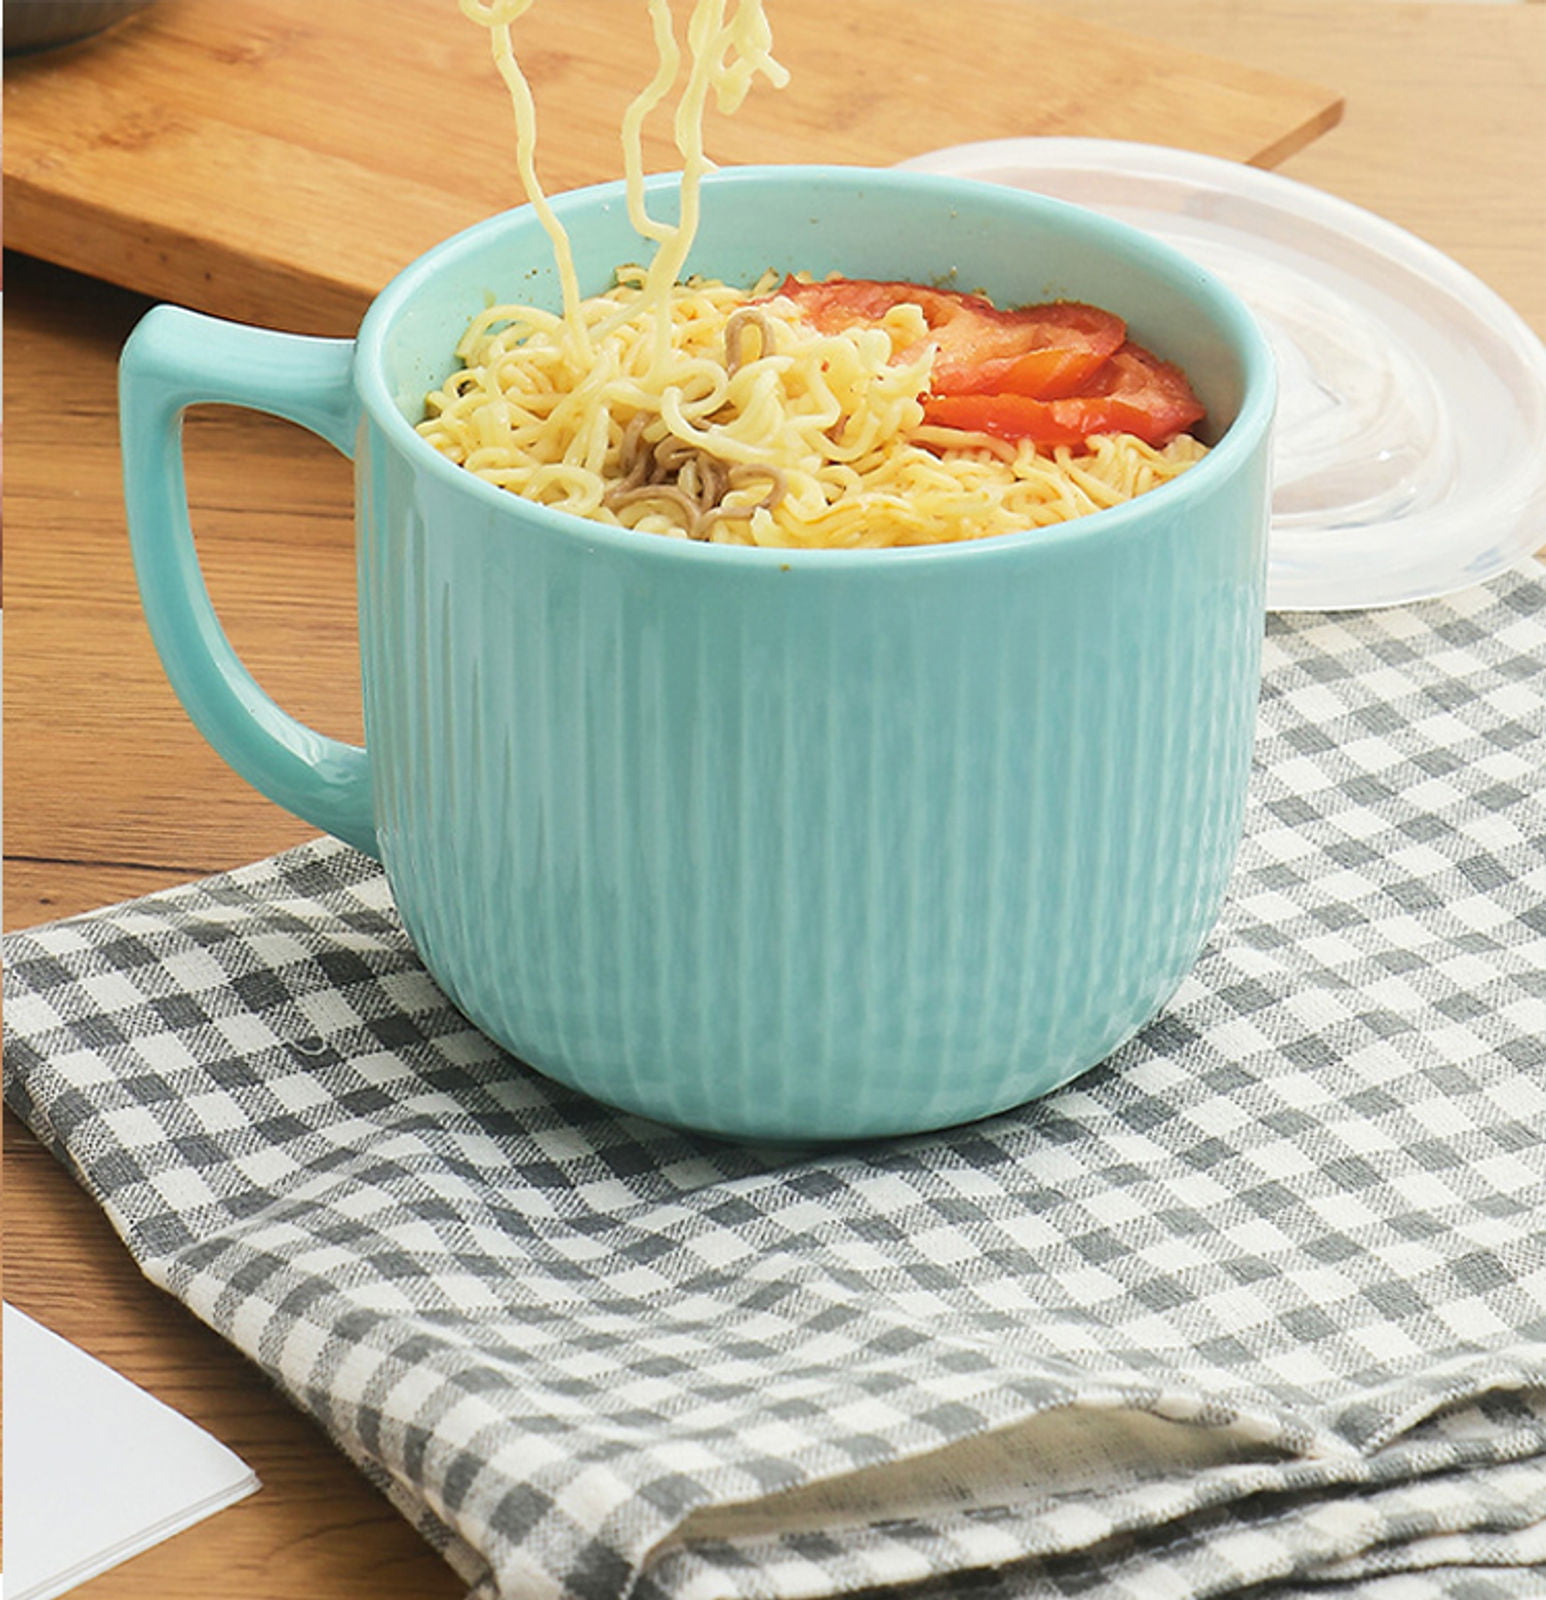 Hoilse Ceramic Soup Bowls with Handle and Vented Lid, 32oz  Large Deep Soup Mug with lid, Travel Ramen Bowls for instant noodle and  Cereal Set of 2 Microwave Safe, Dishwasher